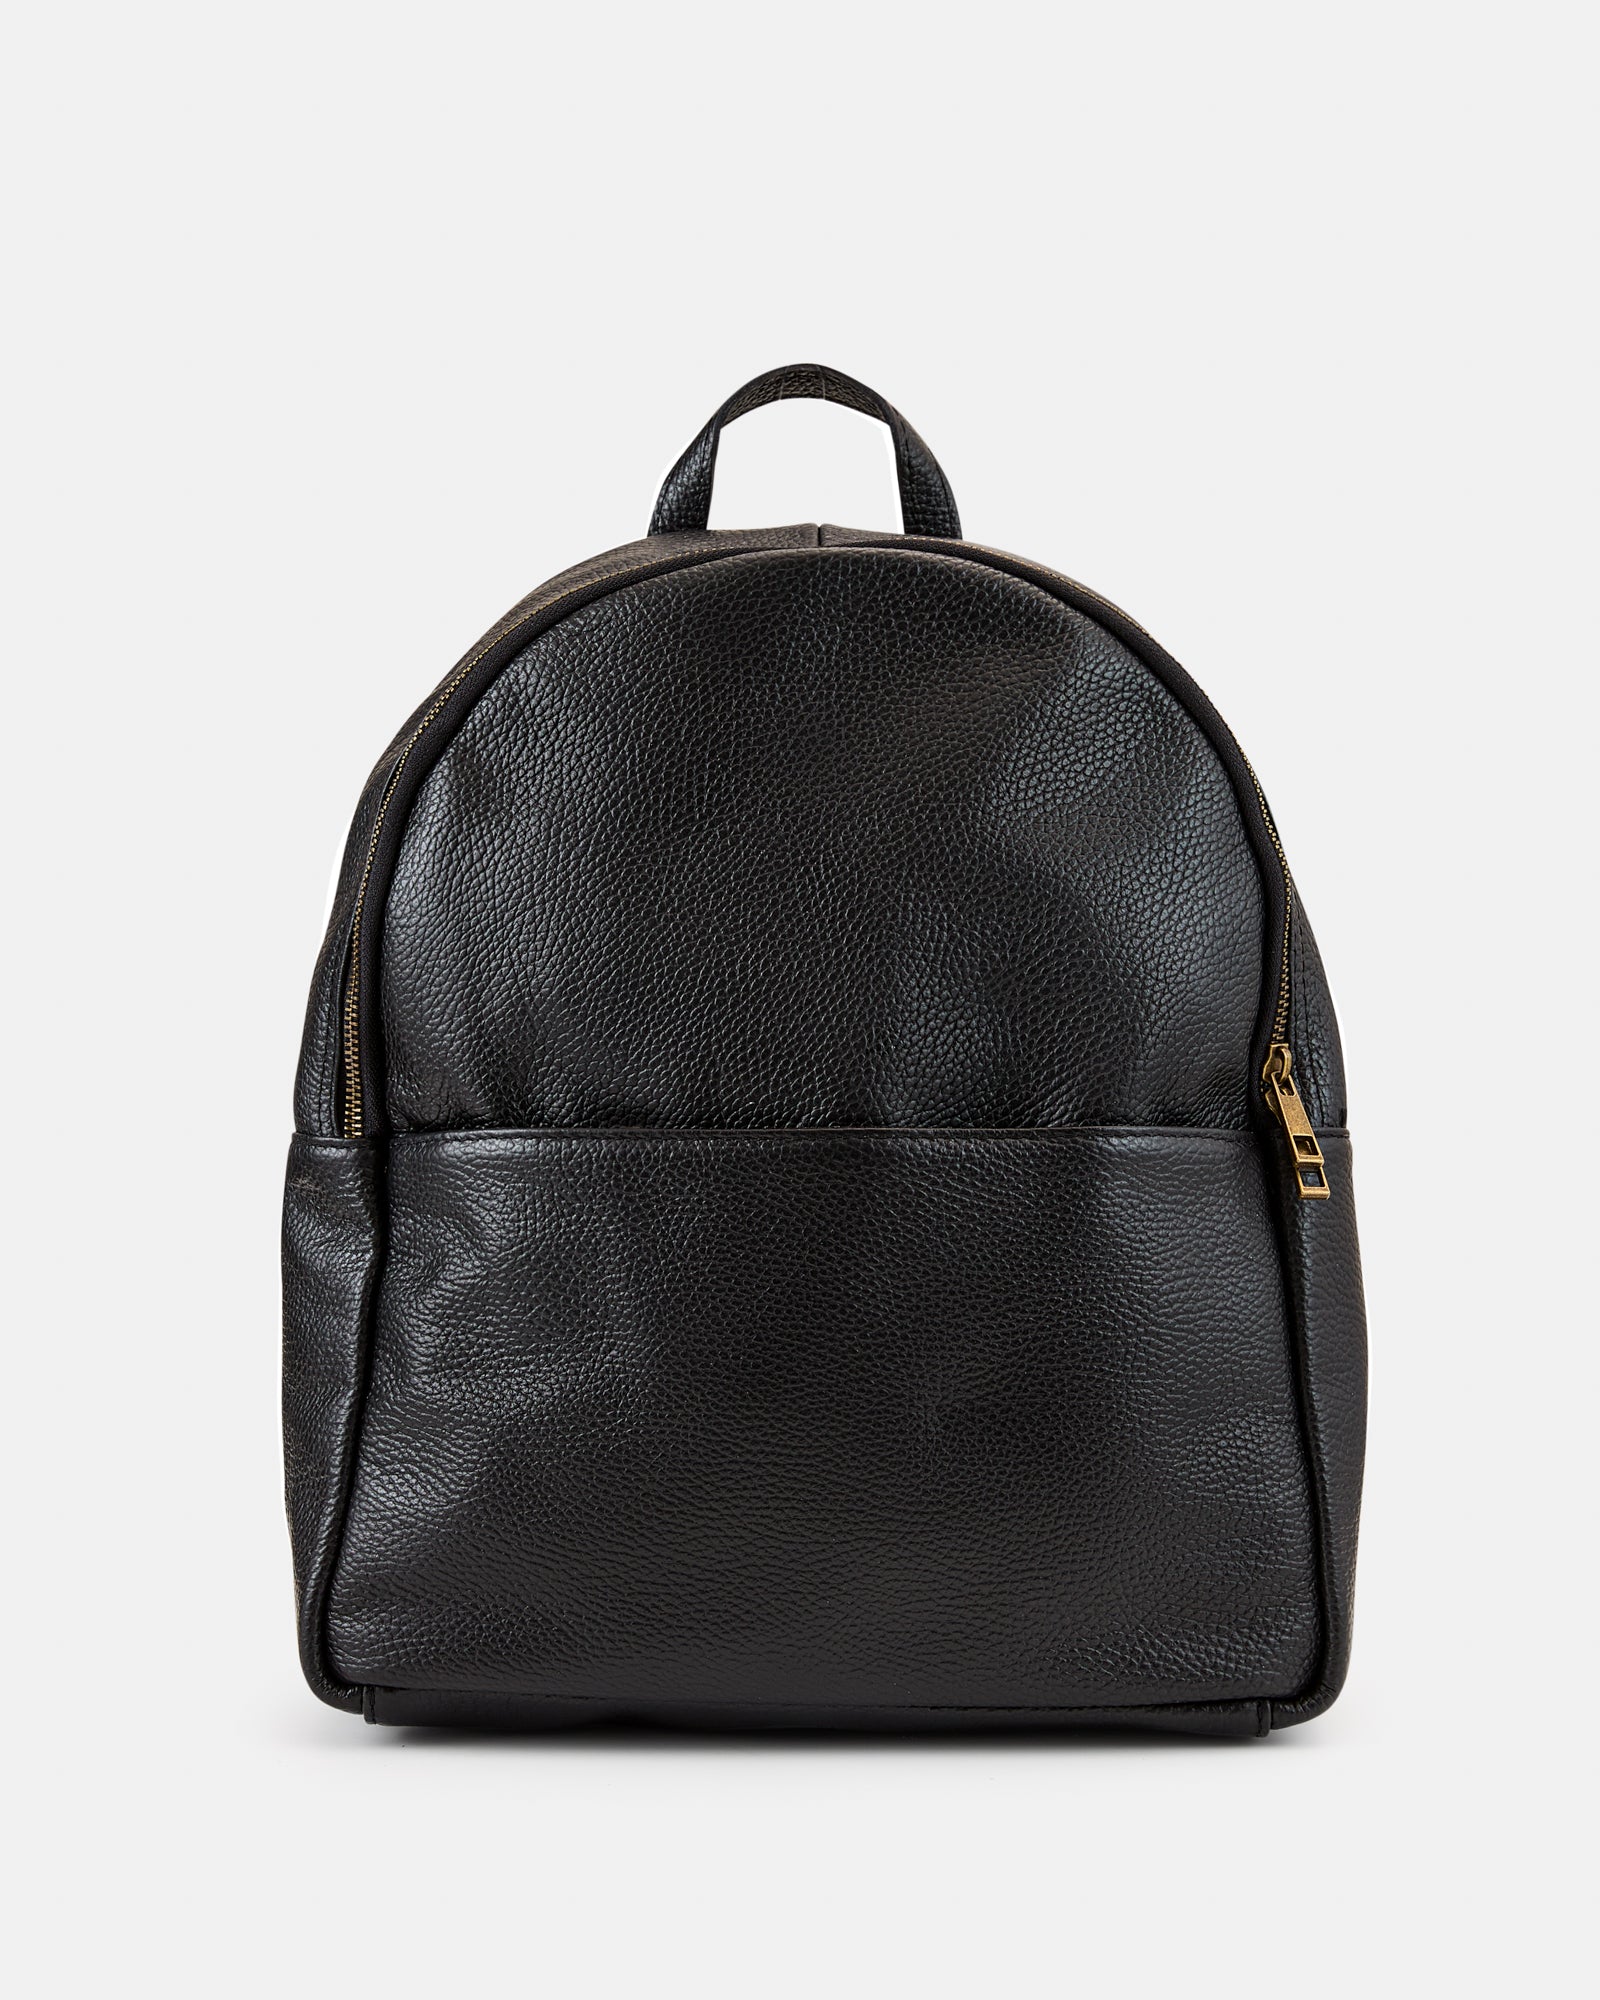 Tulip Black - Leather Backpack - leathershop.com.au